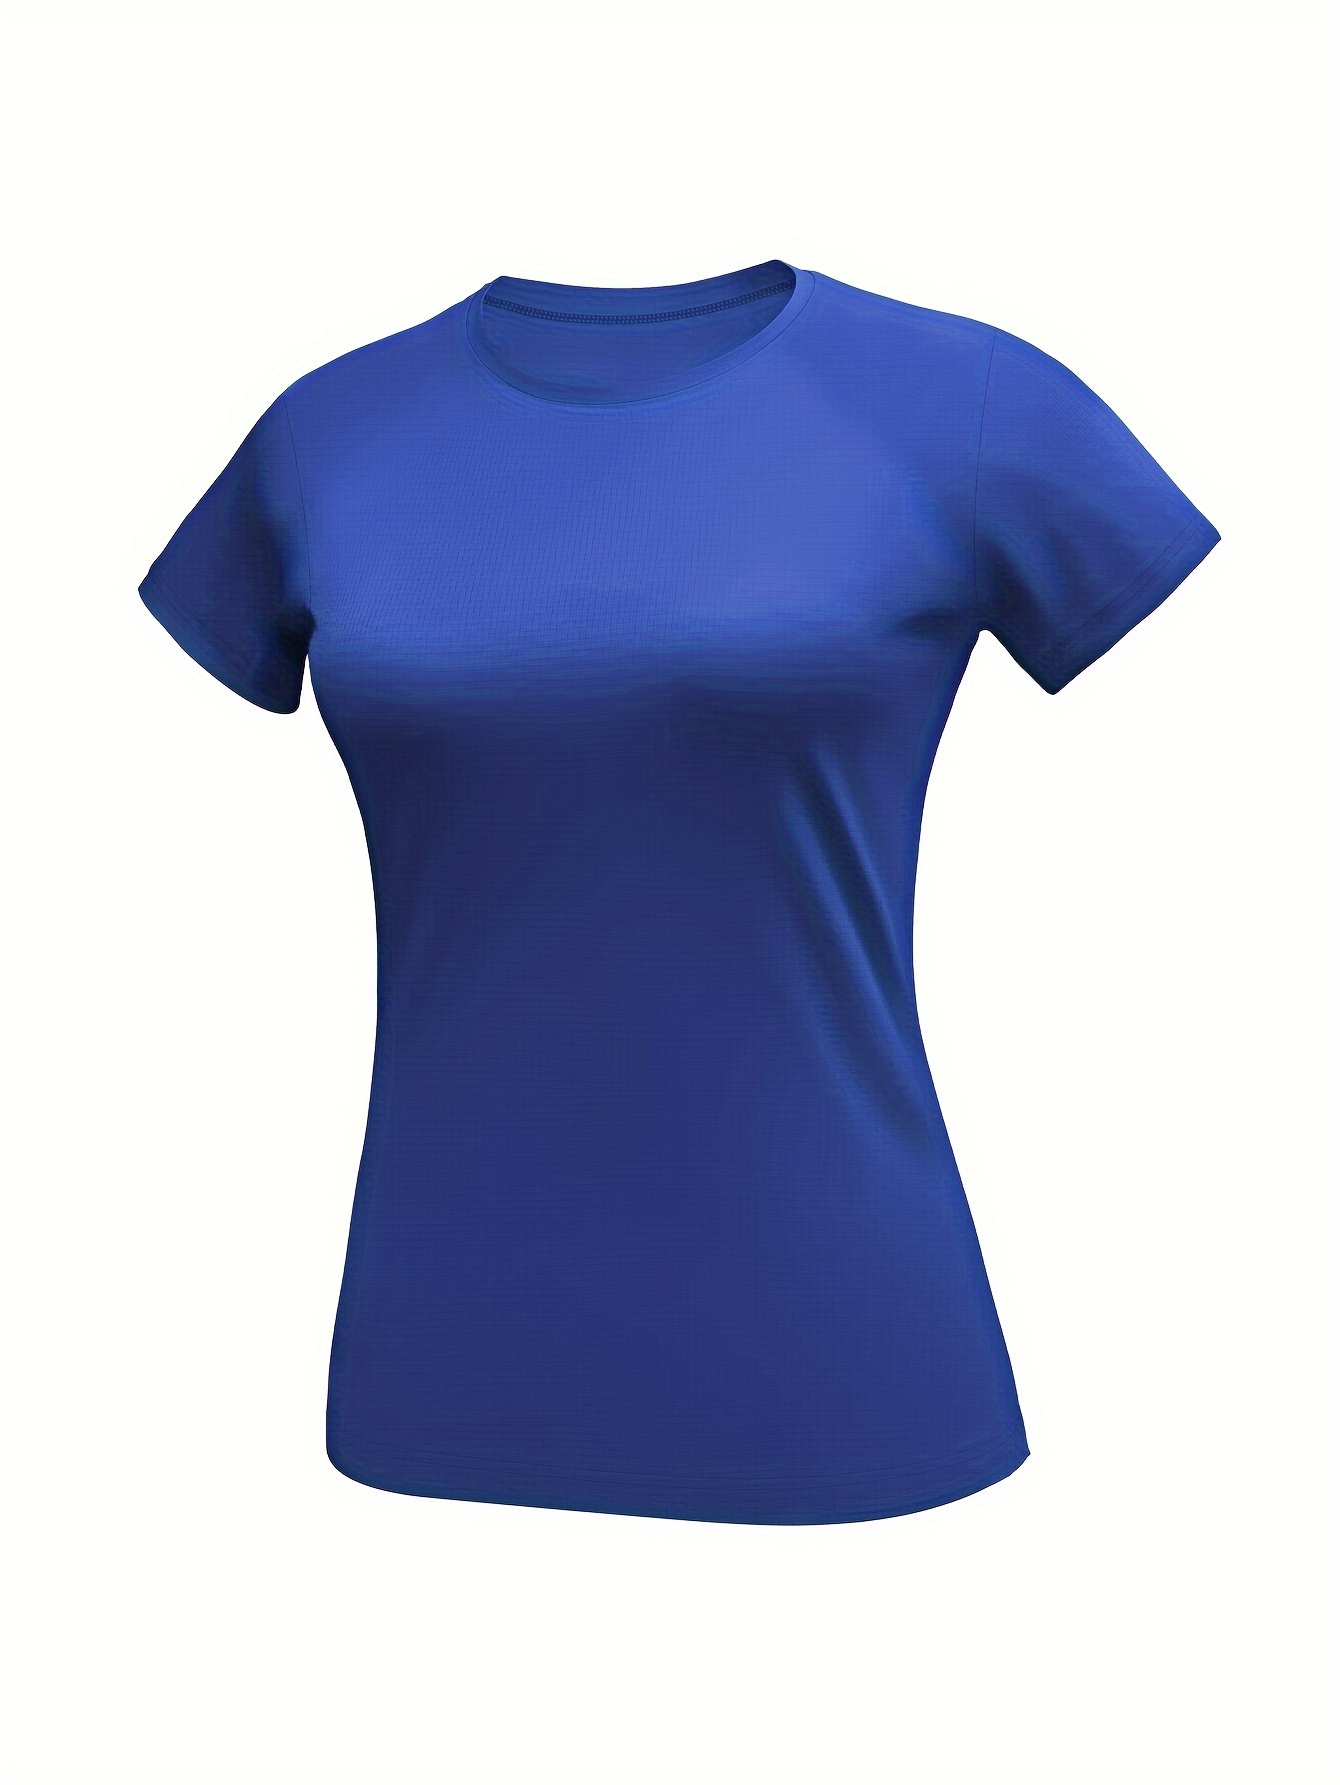 Womens Training & Gym Crew Neck Tops & T-Shirts.